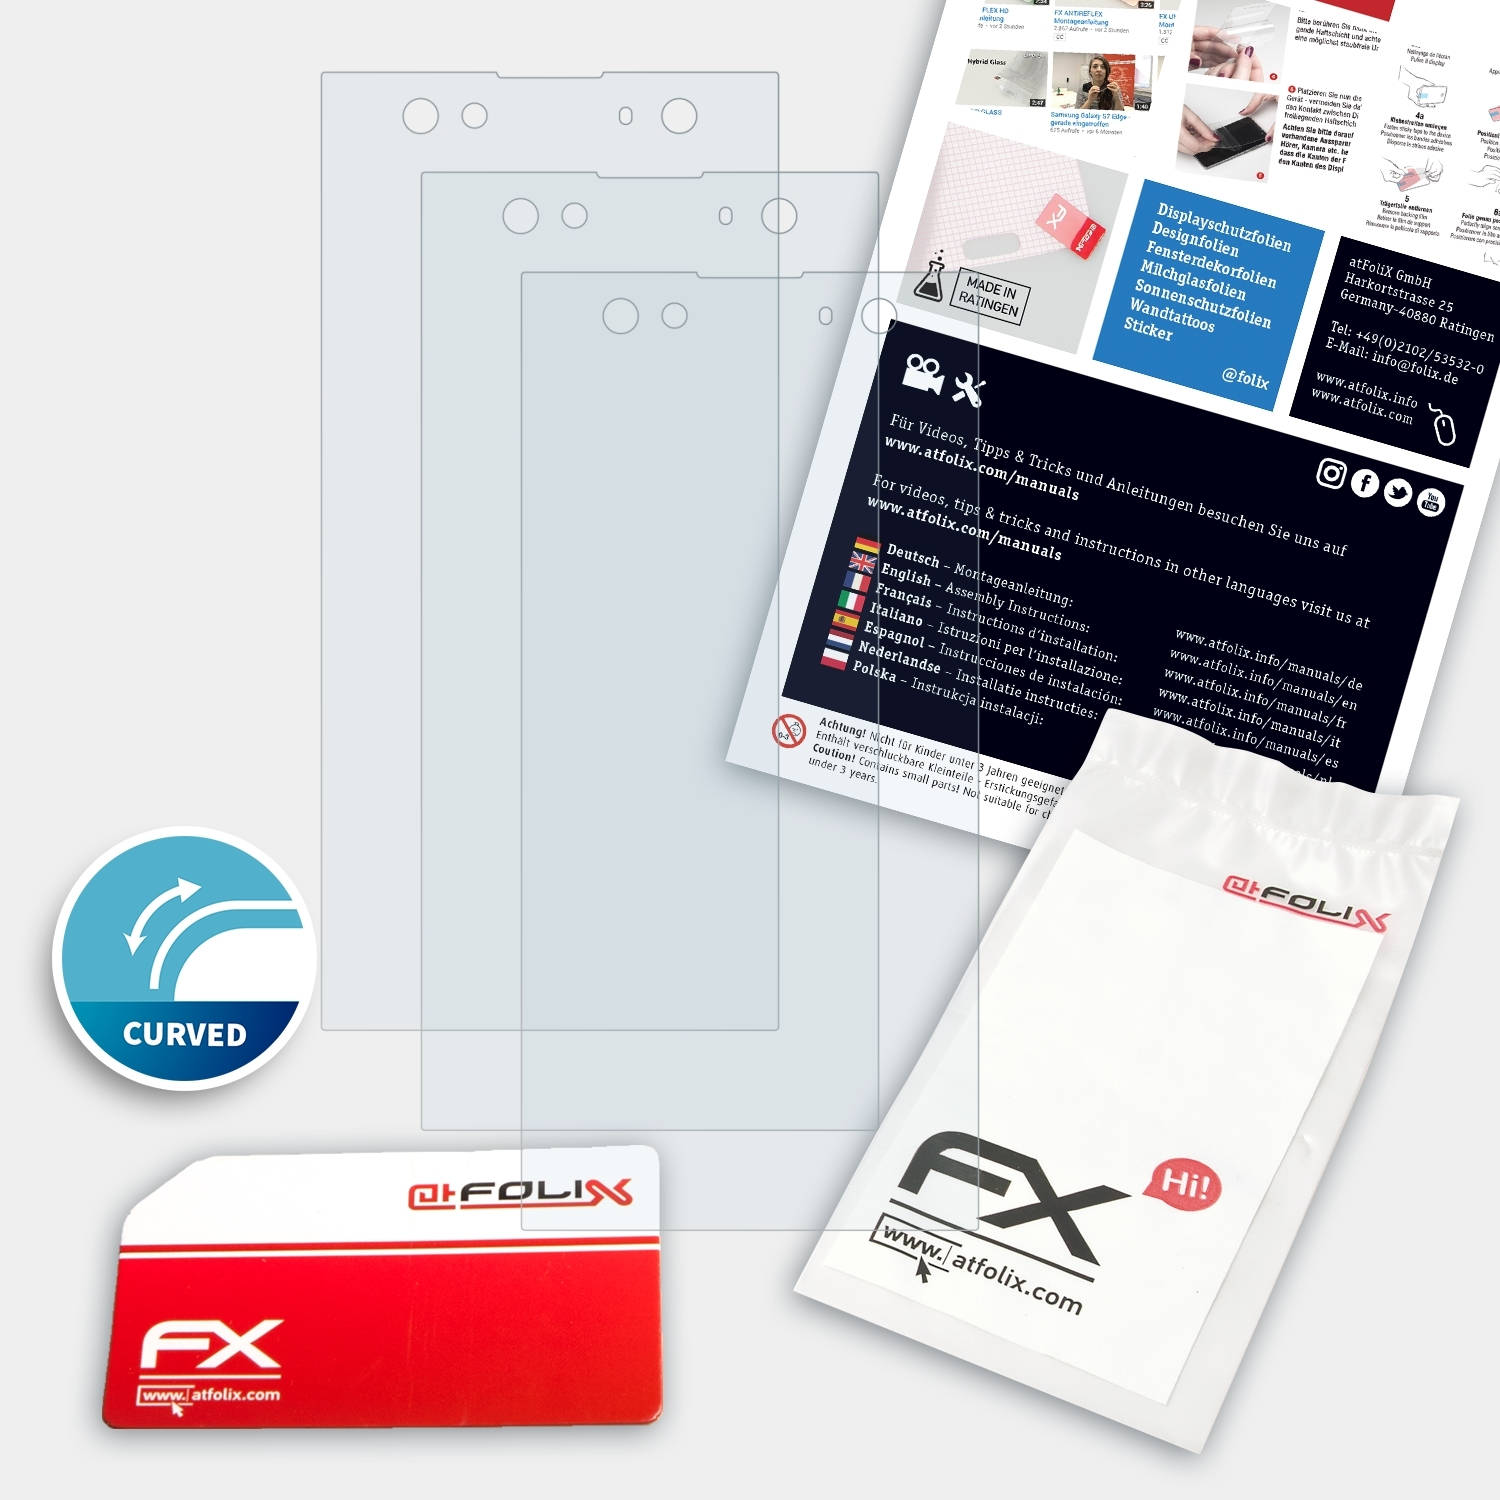 ATFOLIX 3x FX-ActiFleX Displayschutz(für XA2 Ultra) Xperia Sony